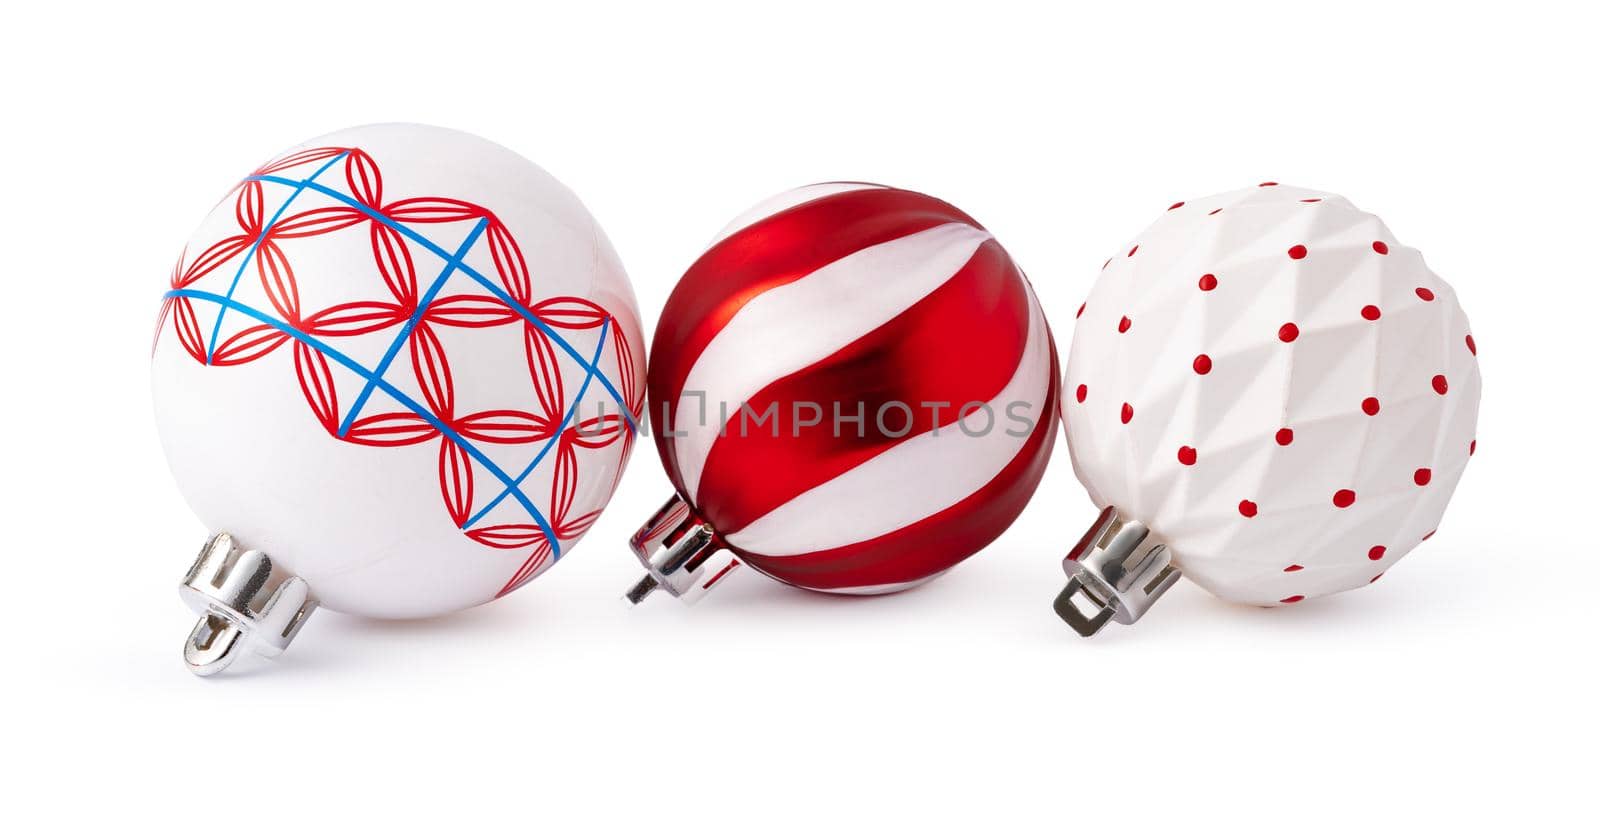 Christmas decoration balls isolated on white background by Fabrikasimf